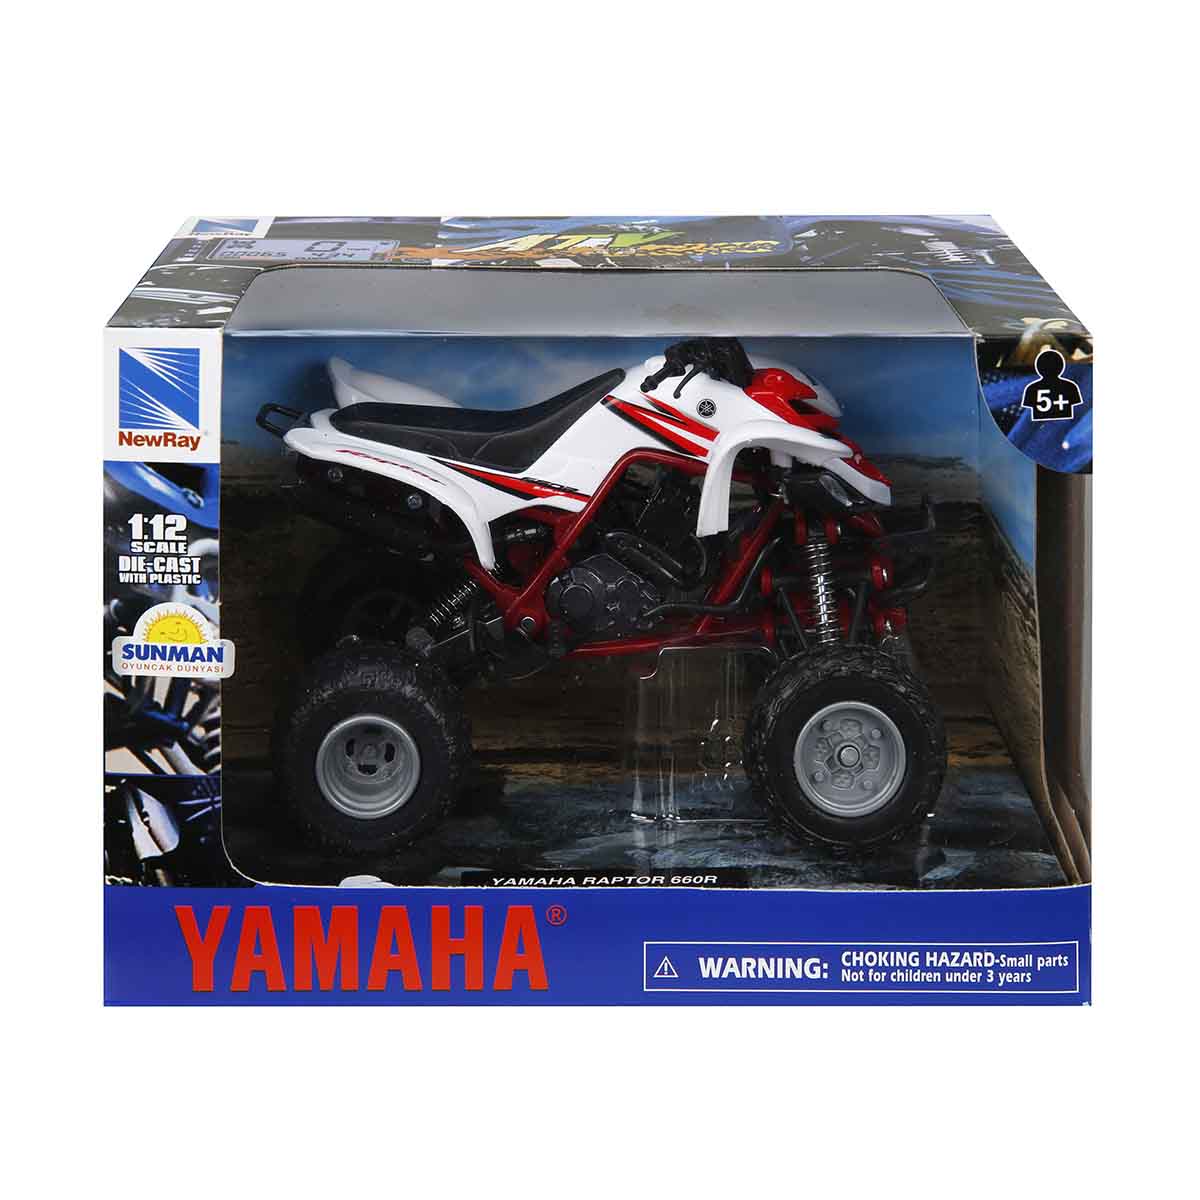 ATV New Ray, Yamaha Raptor 660R, 1:12